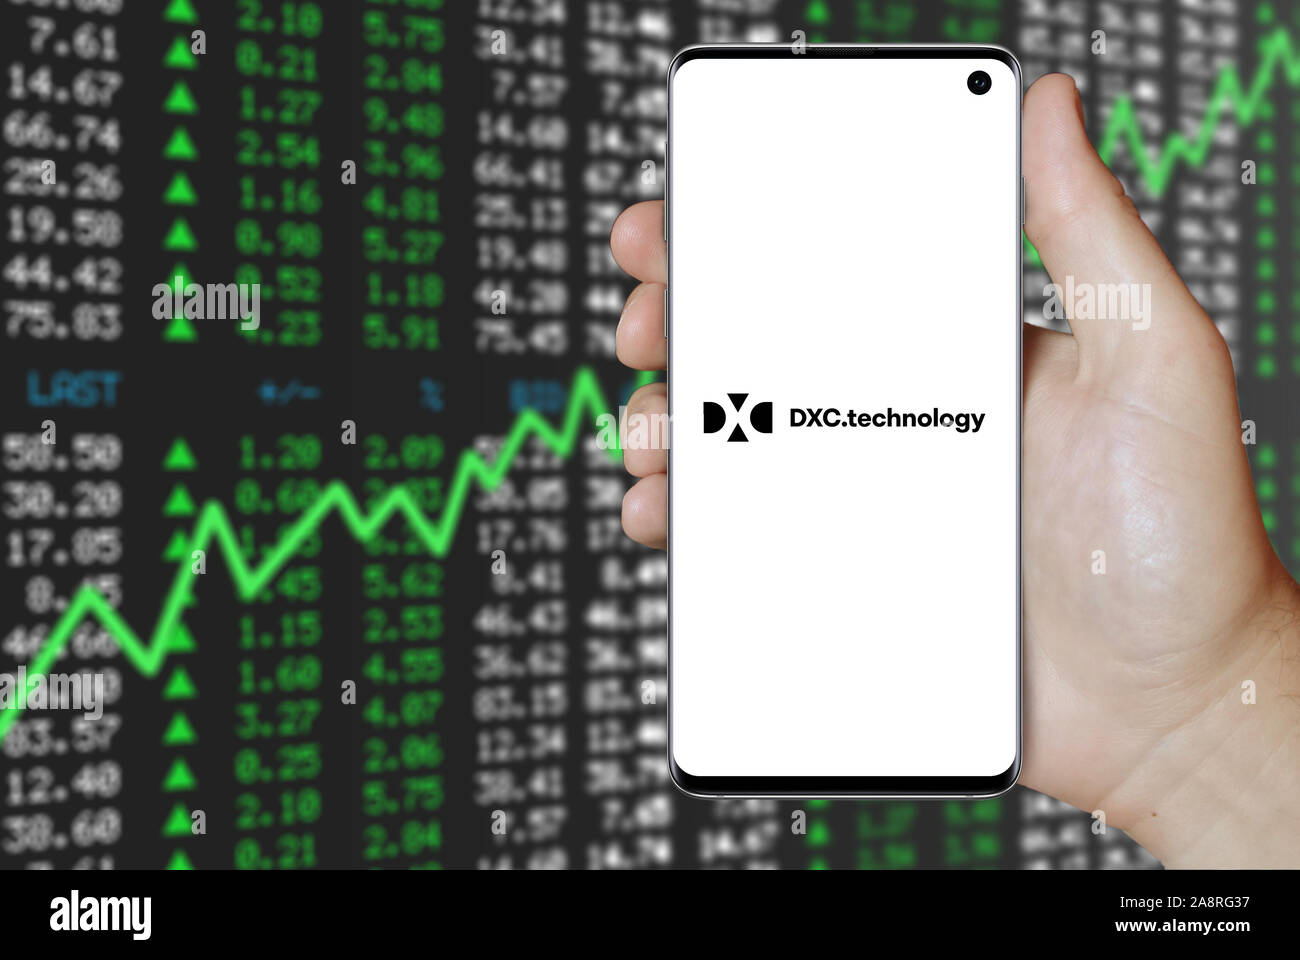 Logo of public company DXC Technology displayed on a smartphone. Positive  stock market background. Credit: PIXDUCE Stock Photo - Alamy